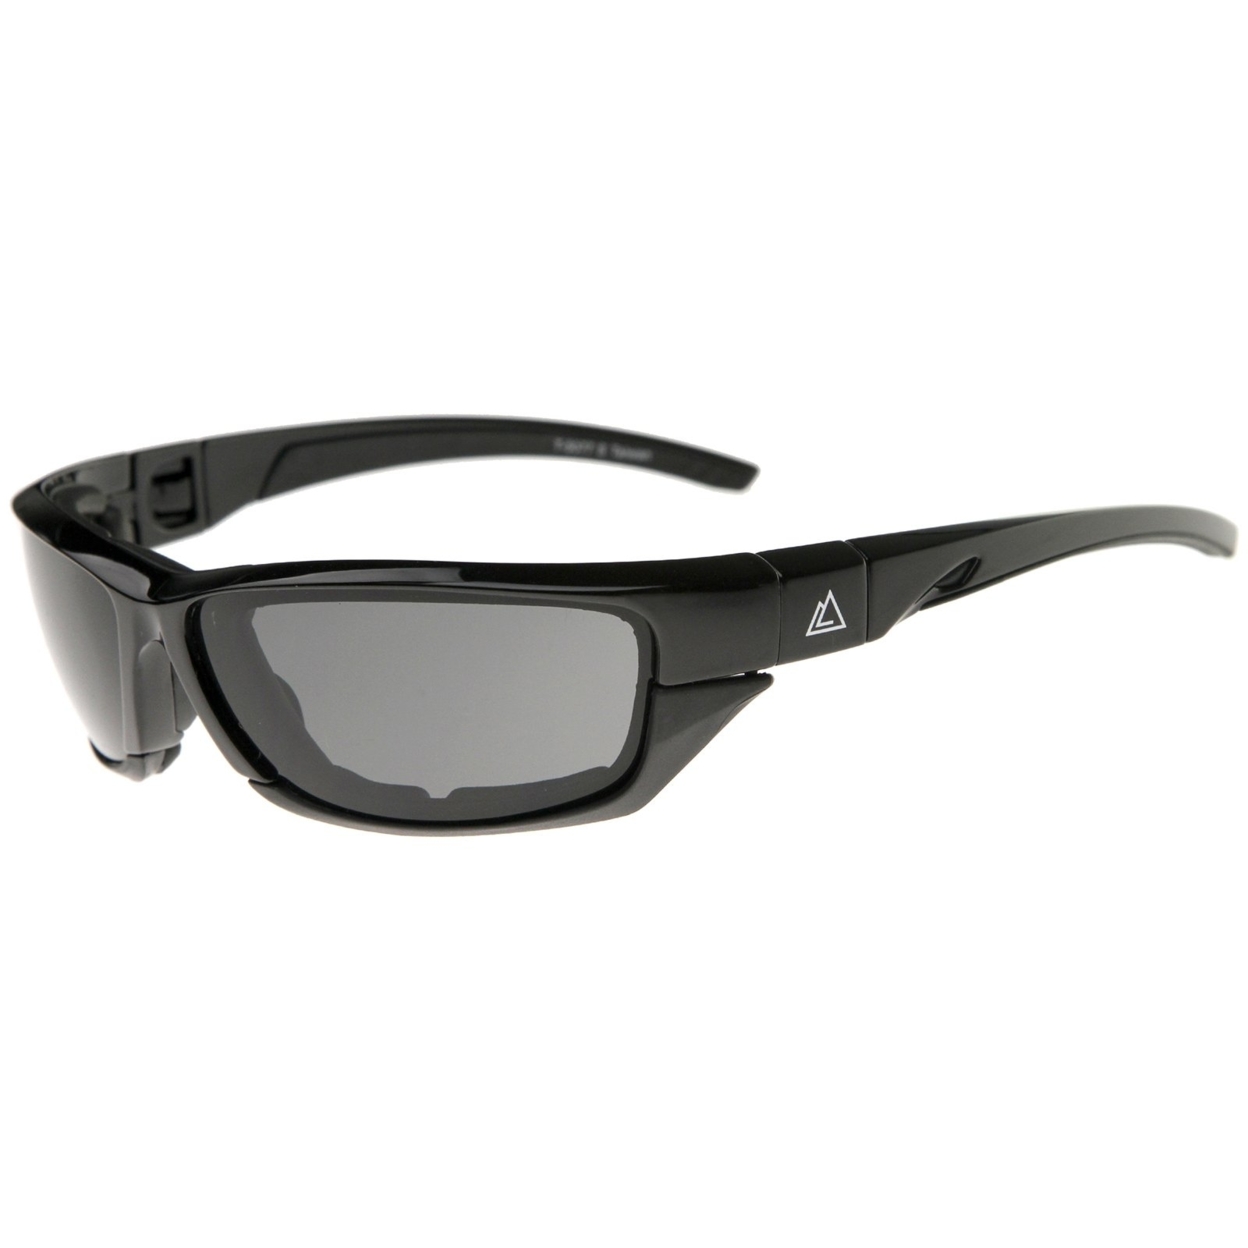 Vinson - Extreme Sports Removable Padding TR-90 Goggles 70mm - Black-Black / Smoke